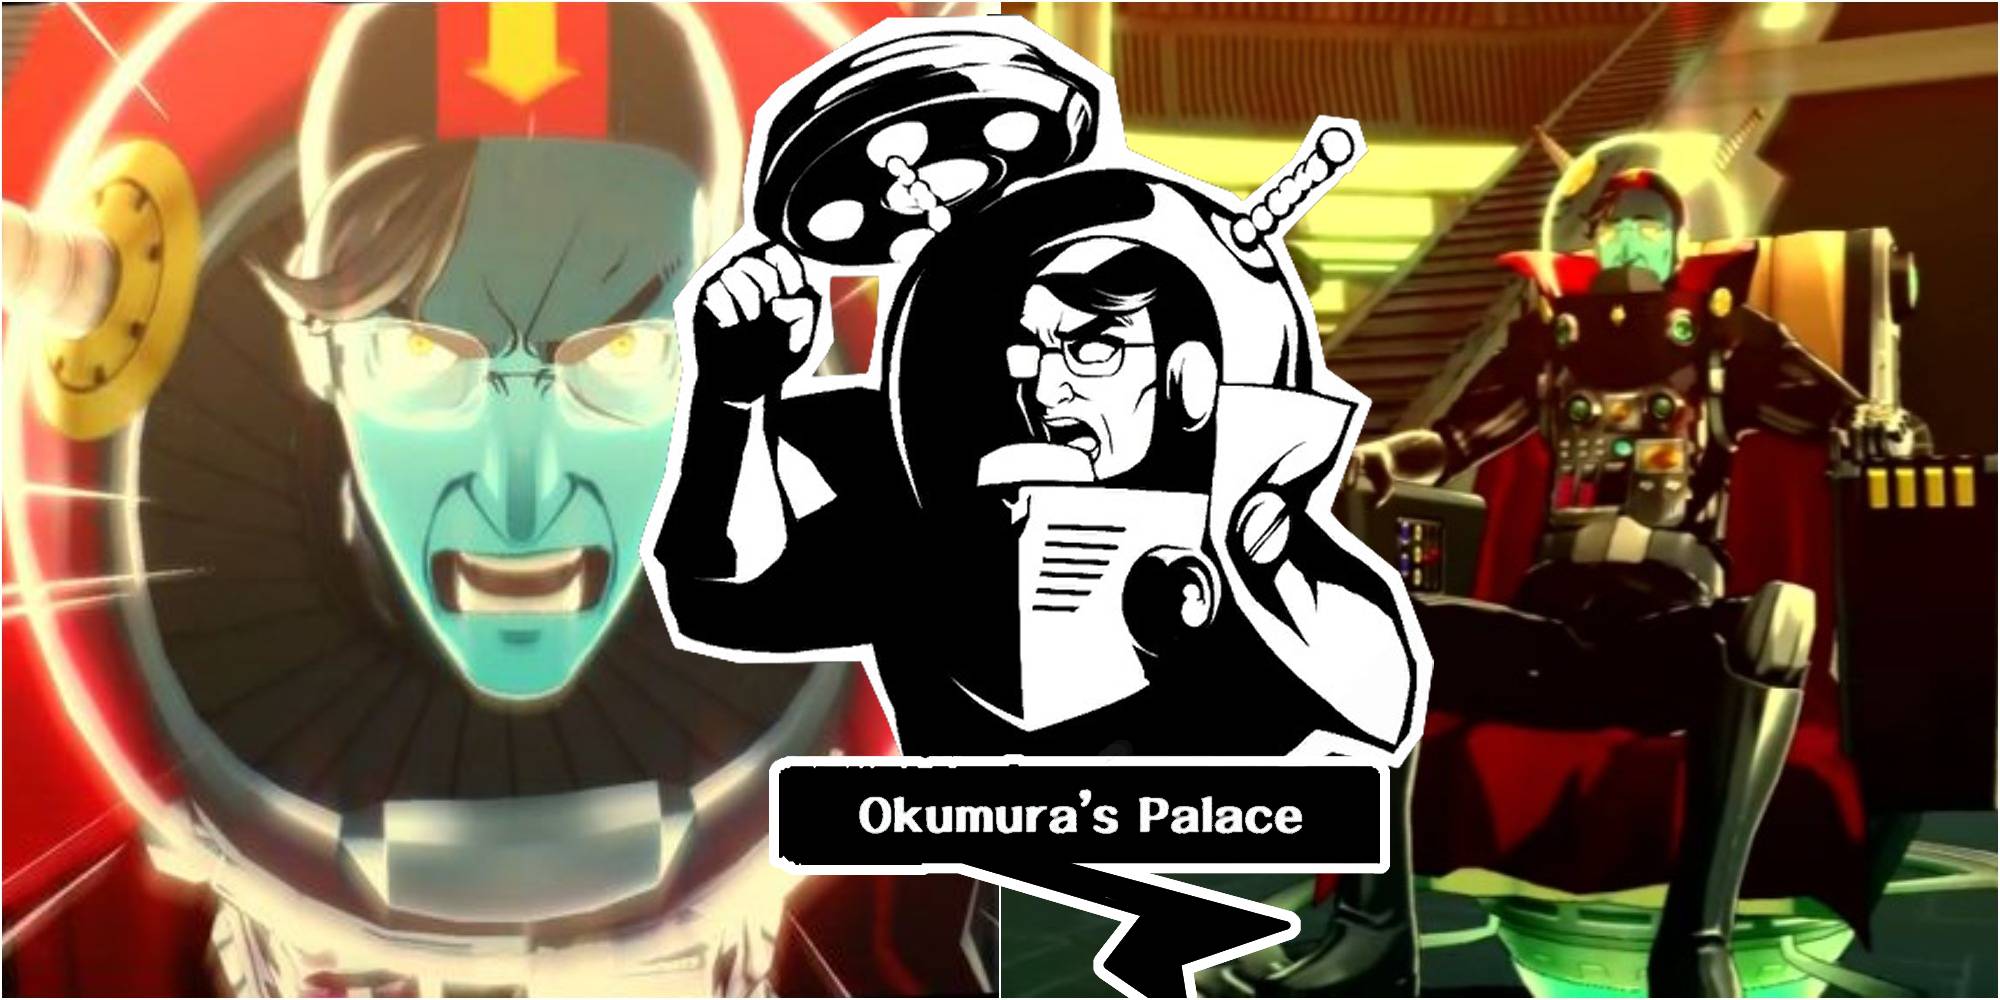 Okumura palace boss